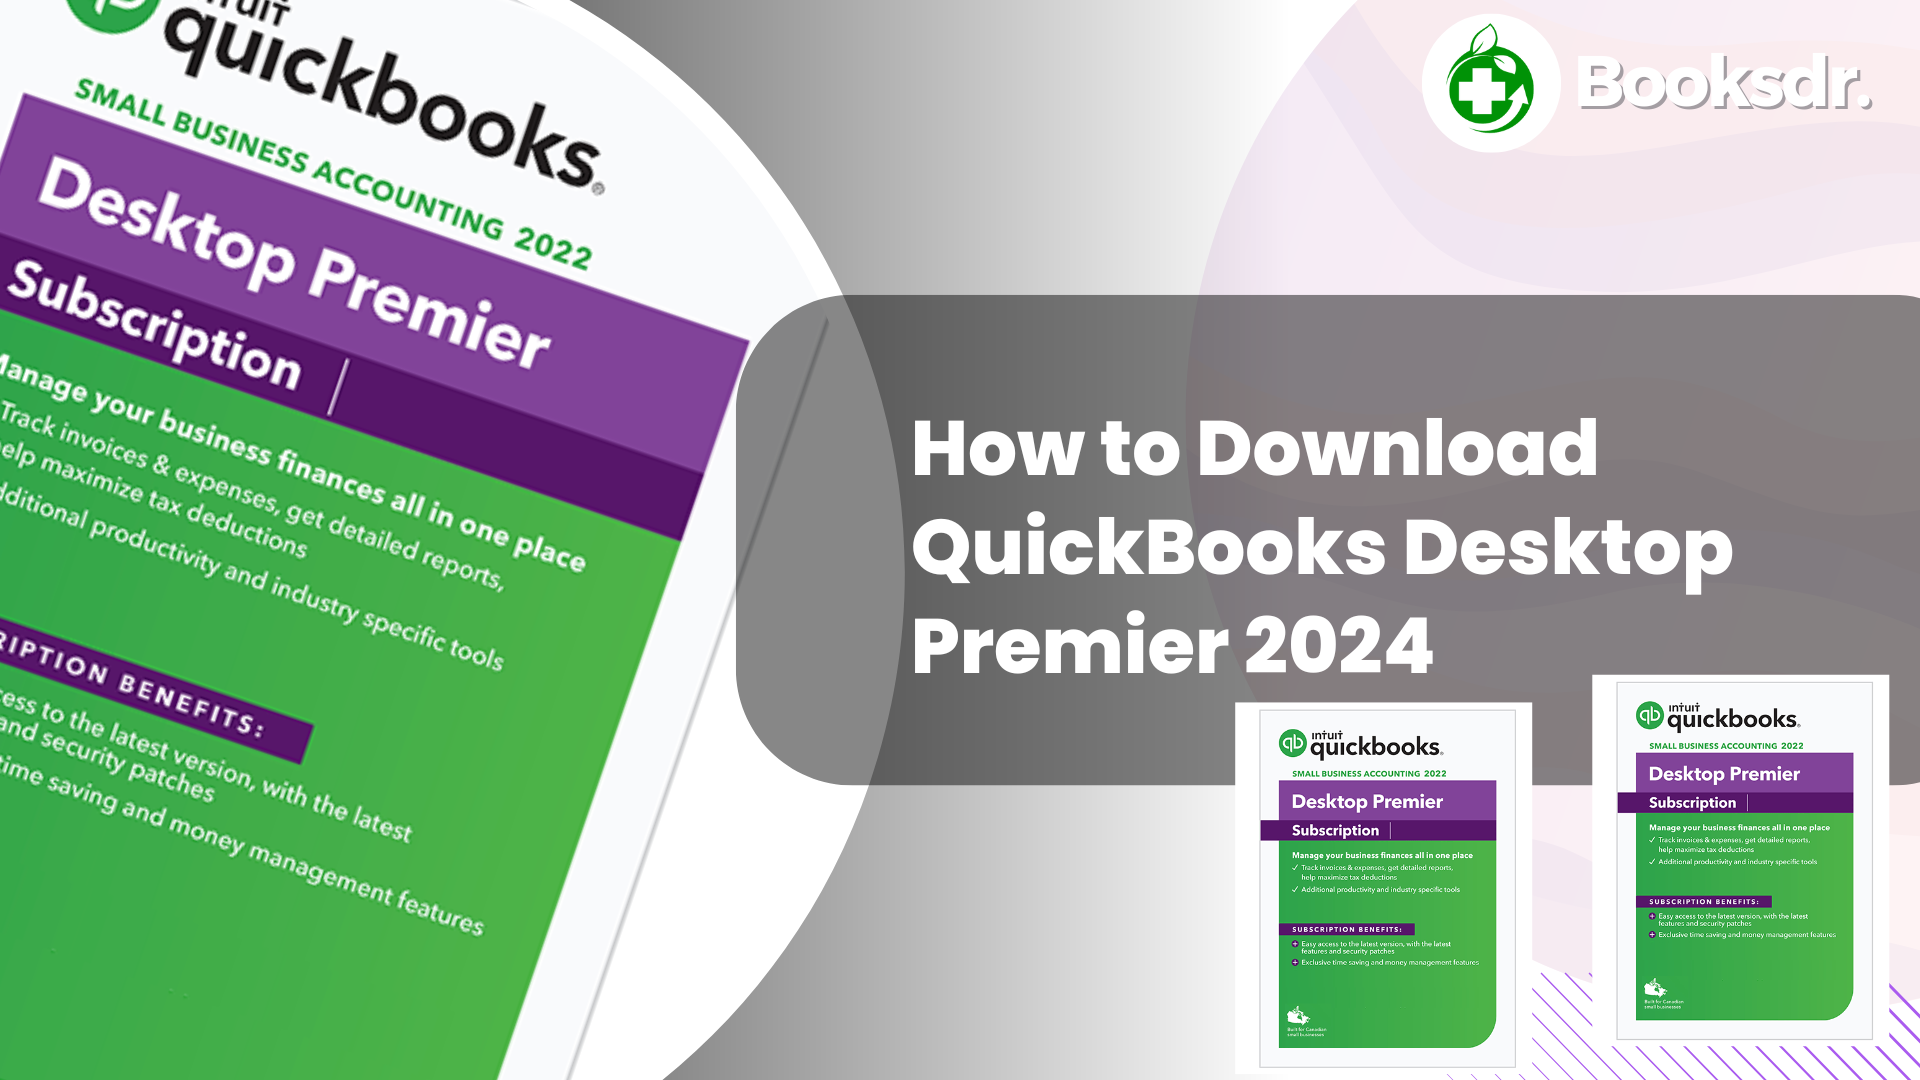 QuickBooks Desktop Premier 2024